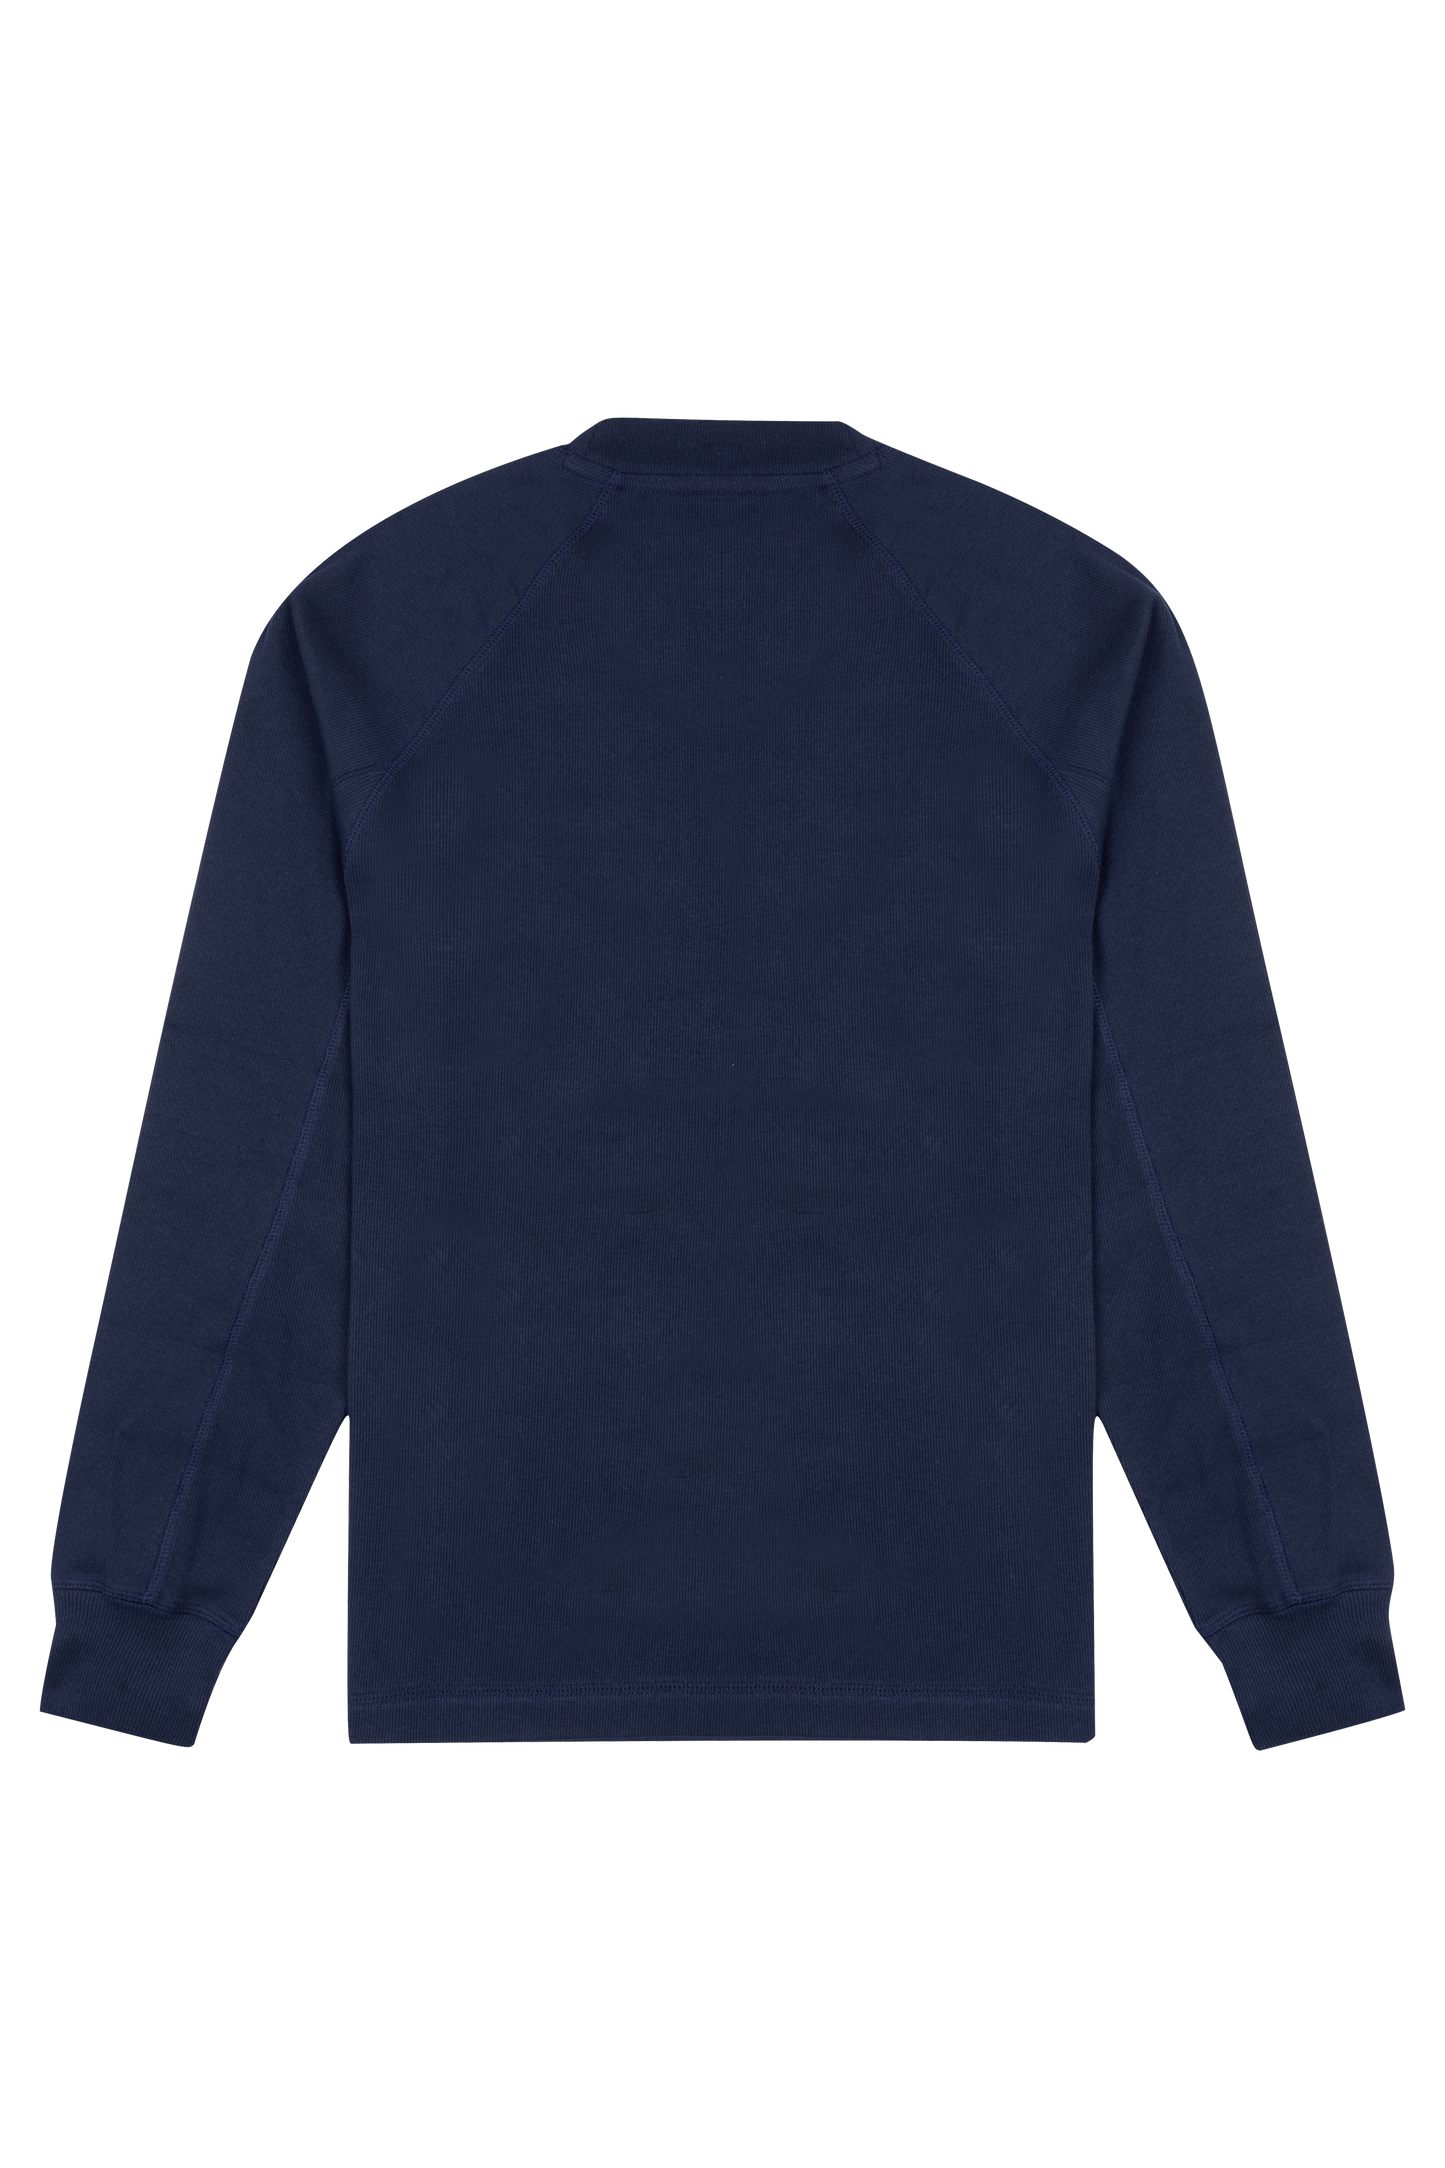 Navy Crewneck Sweatshirt